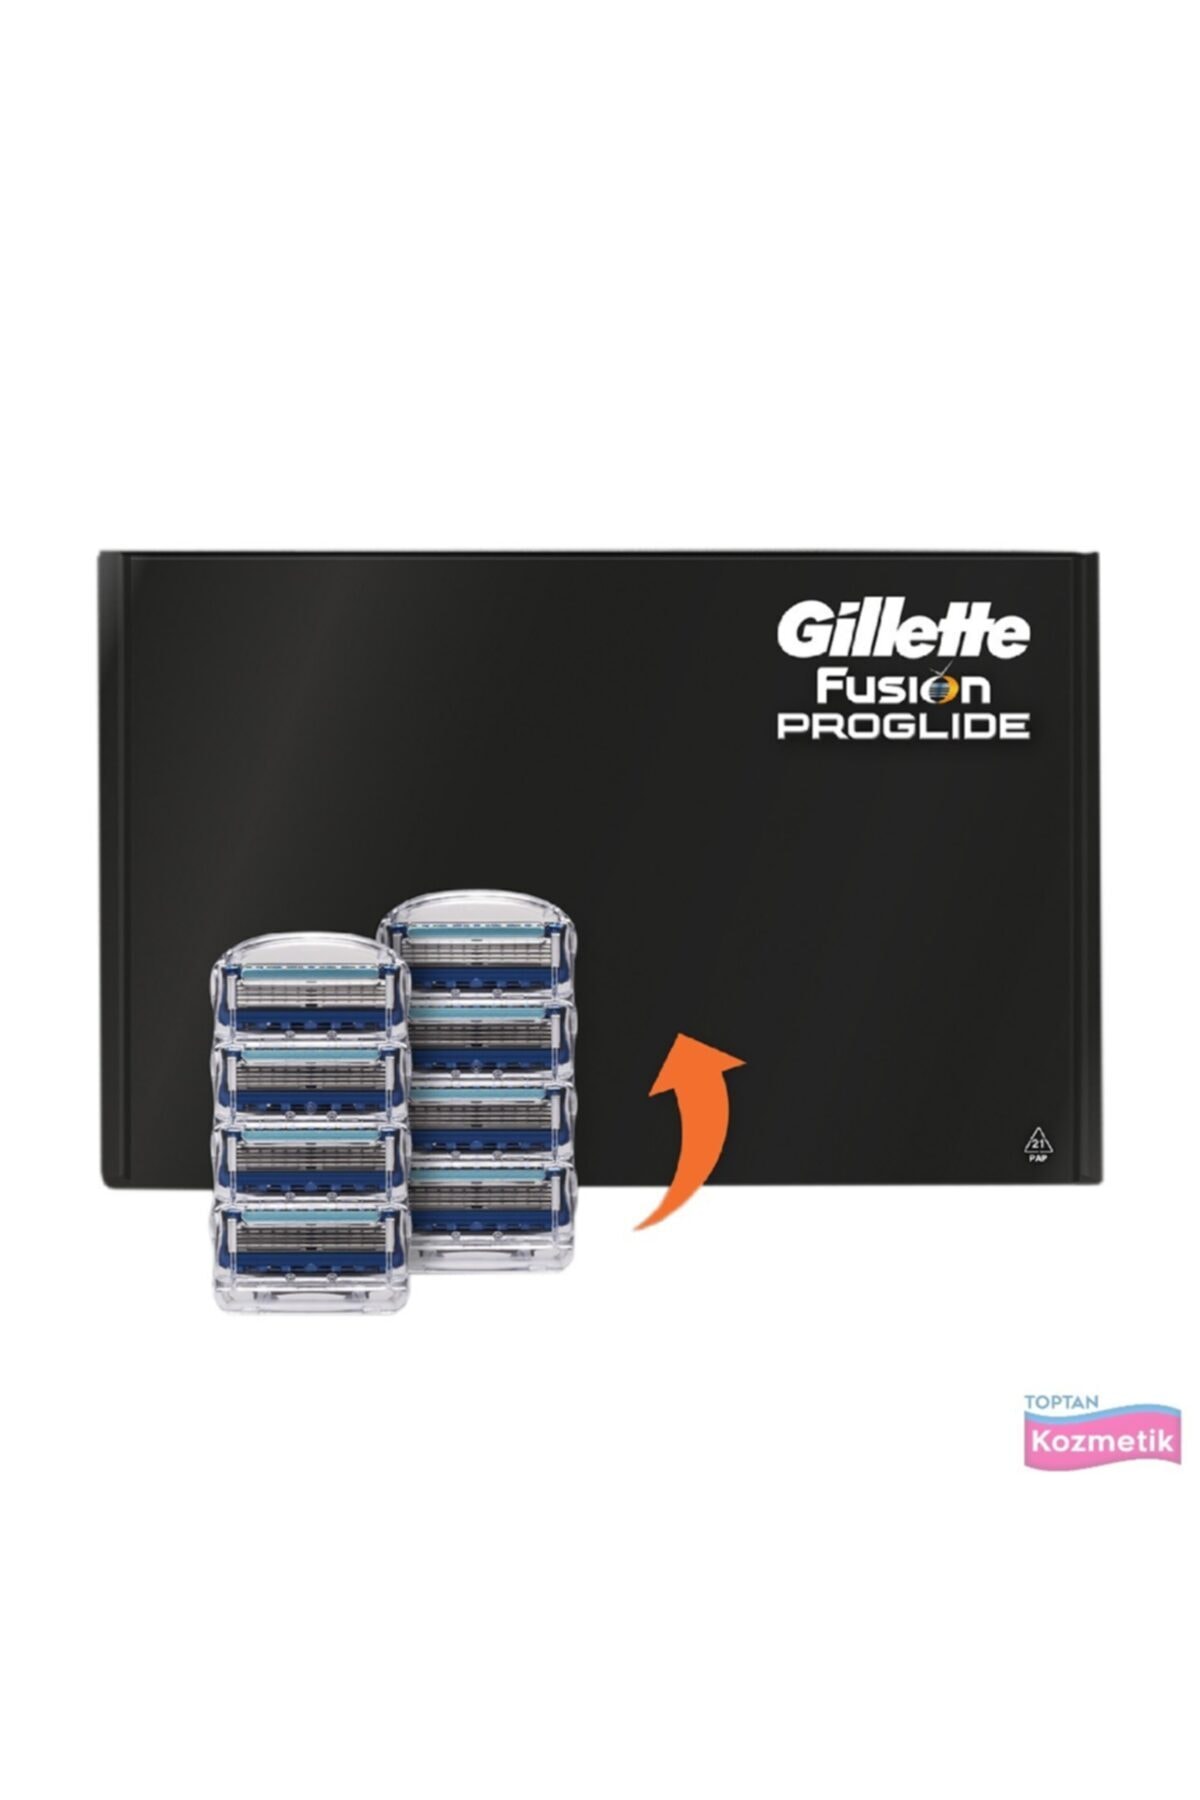 Gillette Fusion Proglide Yedek Tıraş Bıçağı 8'li Özel Karton Ambalaj